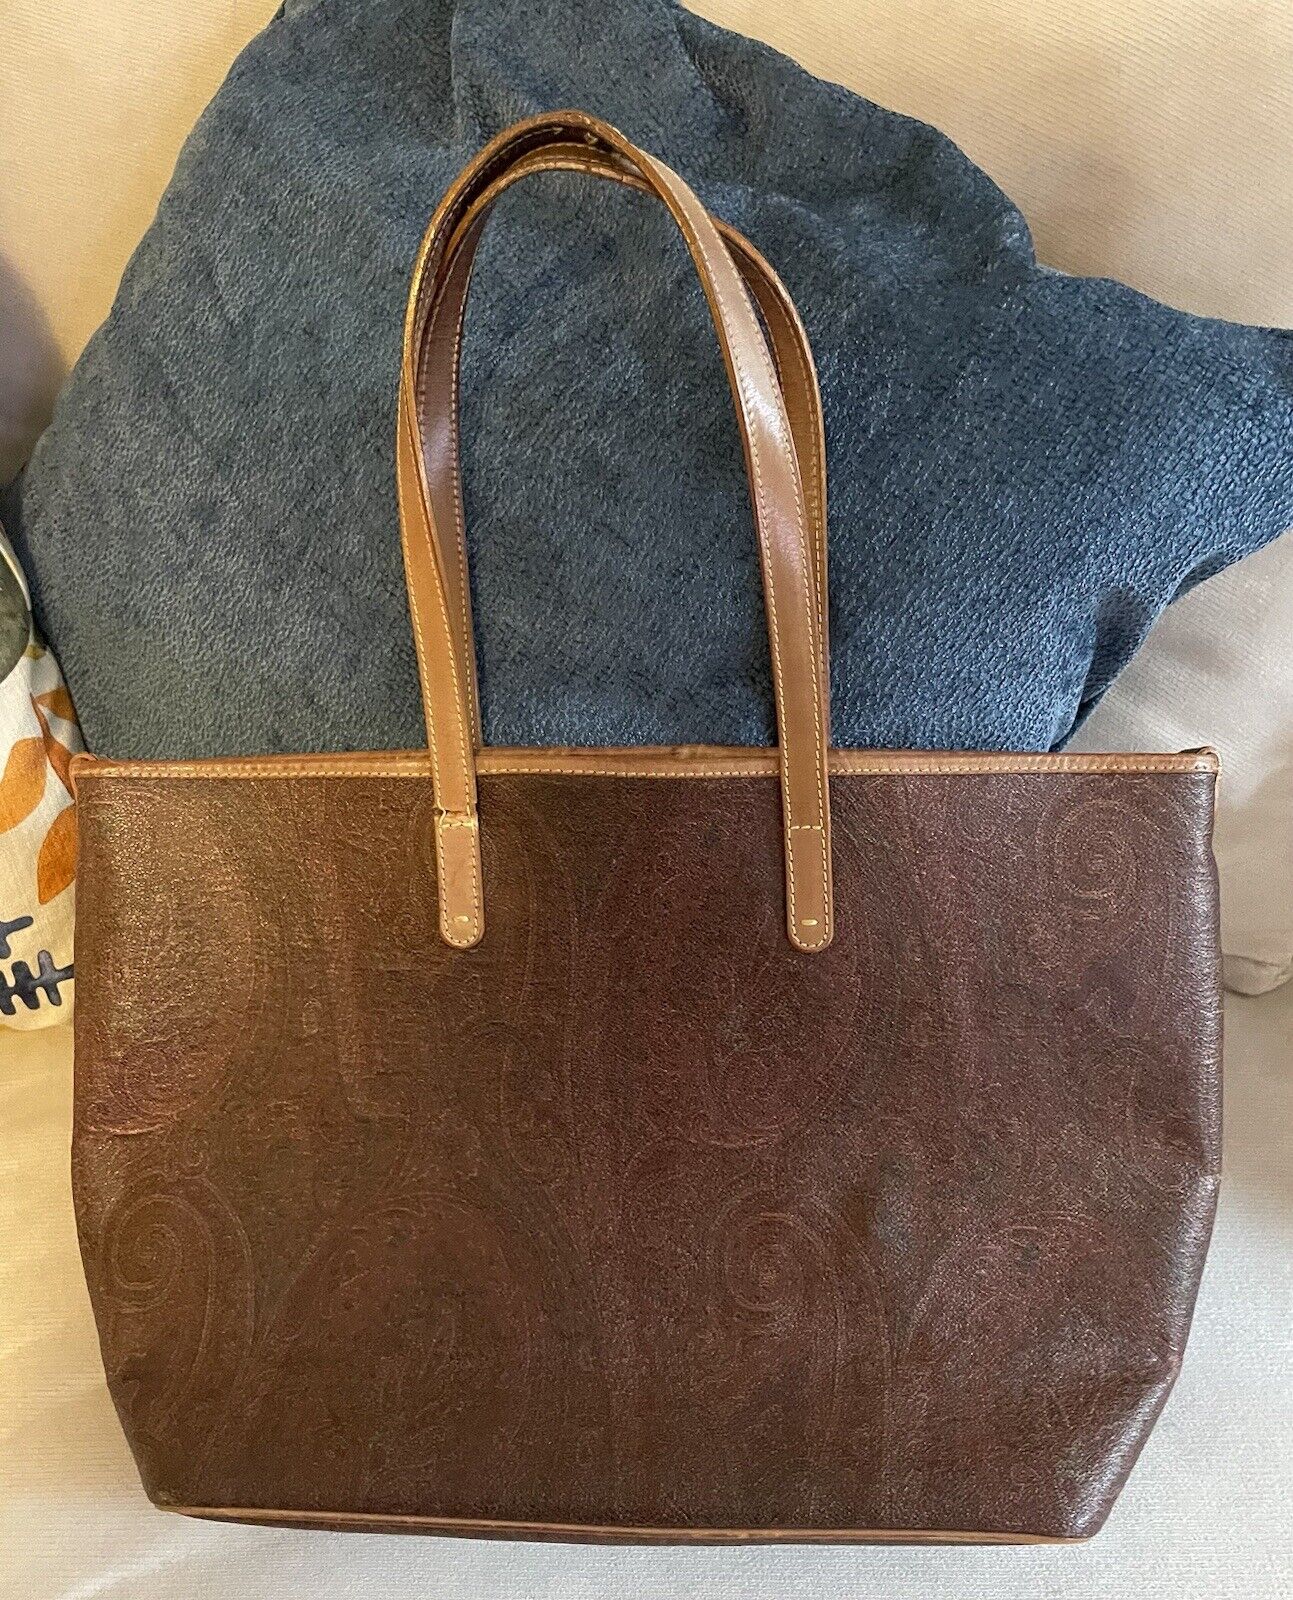 ETRO Handbag Tote Bag Paisley Pattern Leather Brown Multicolor Lining.